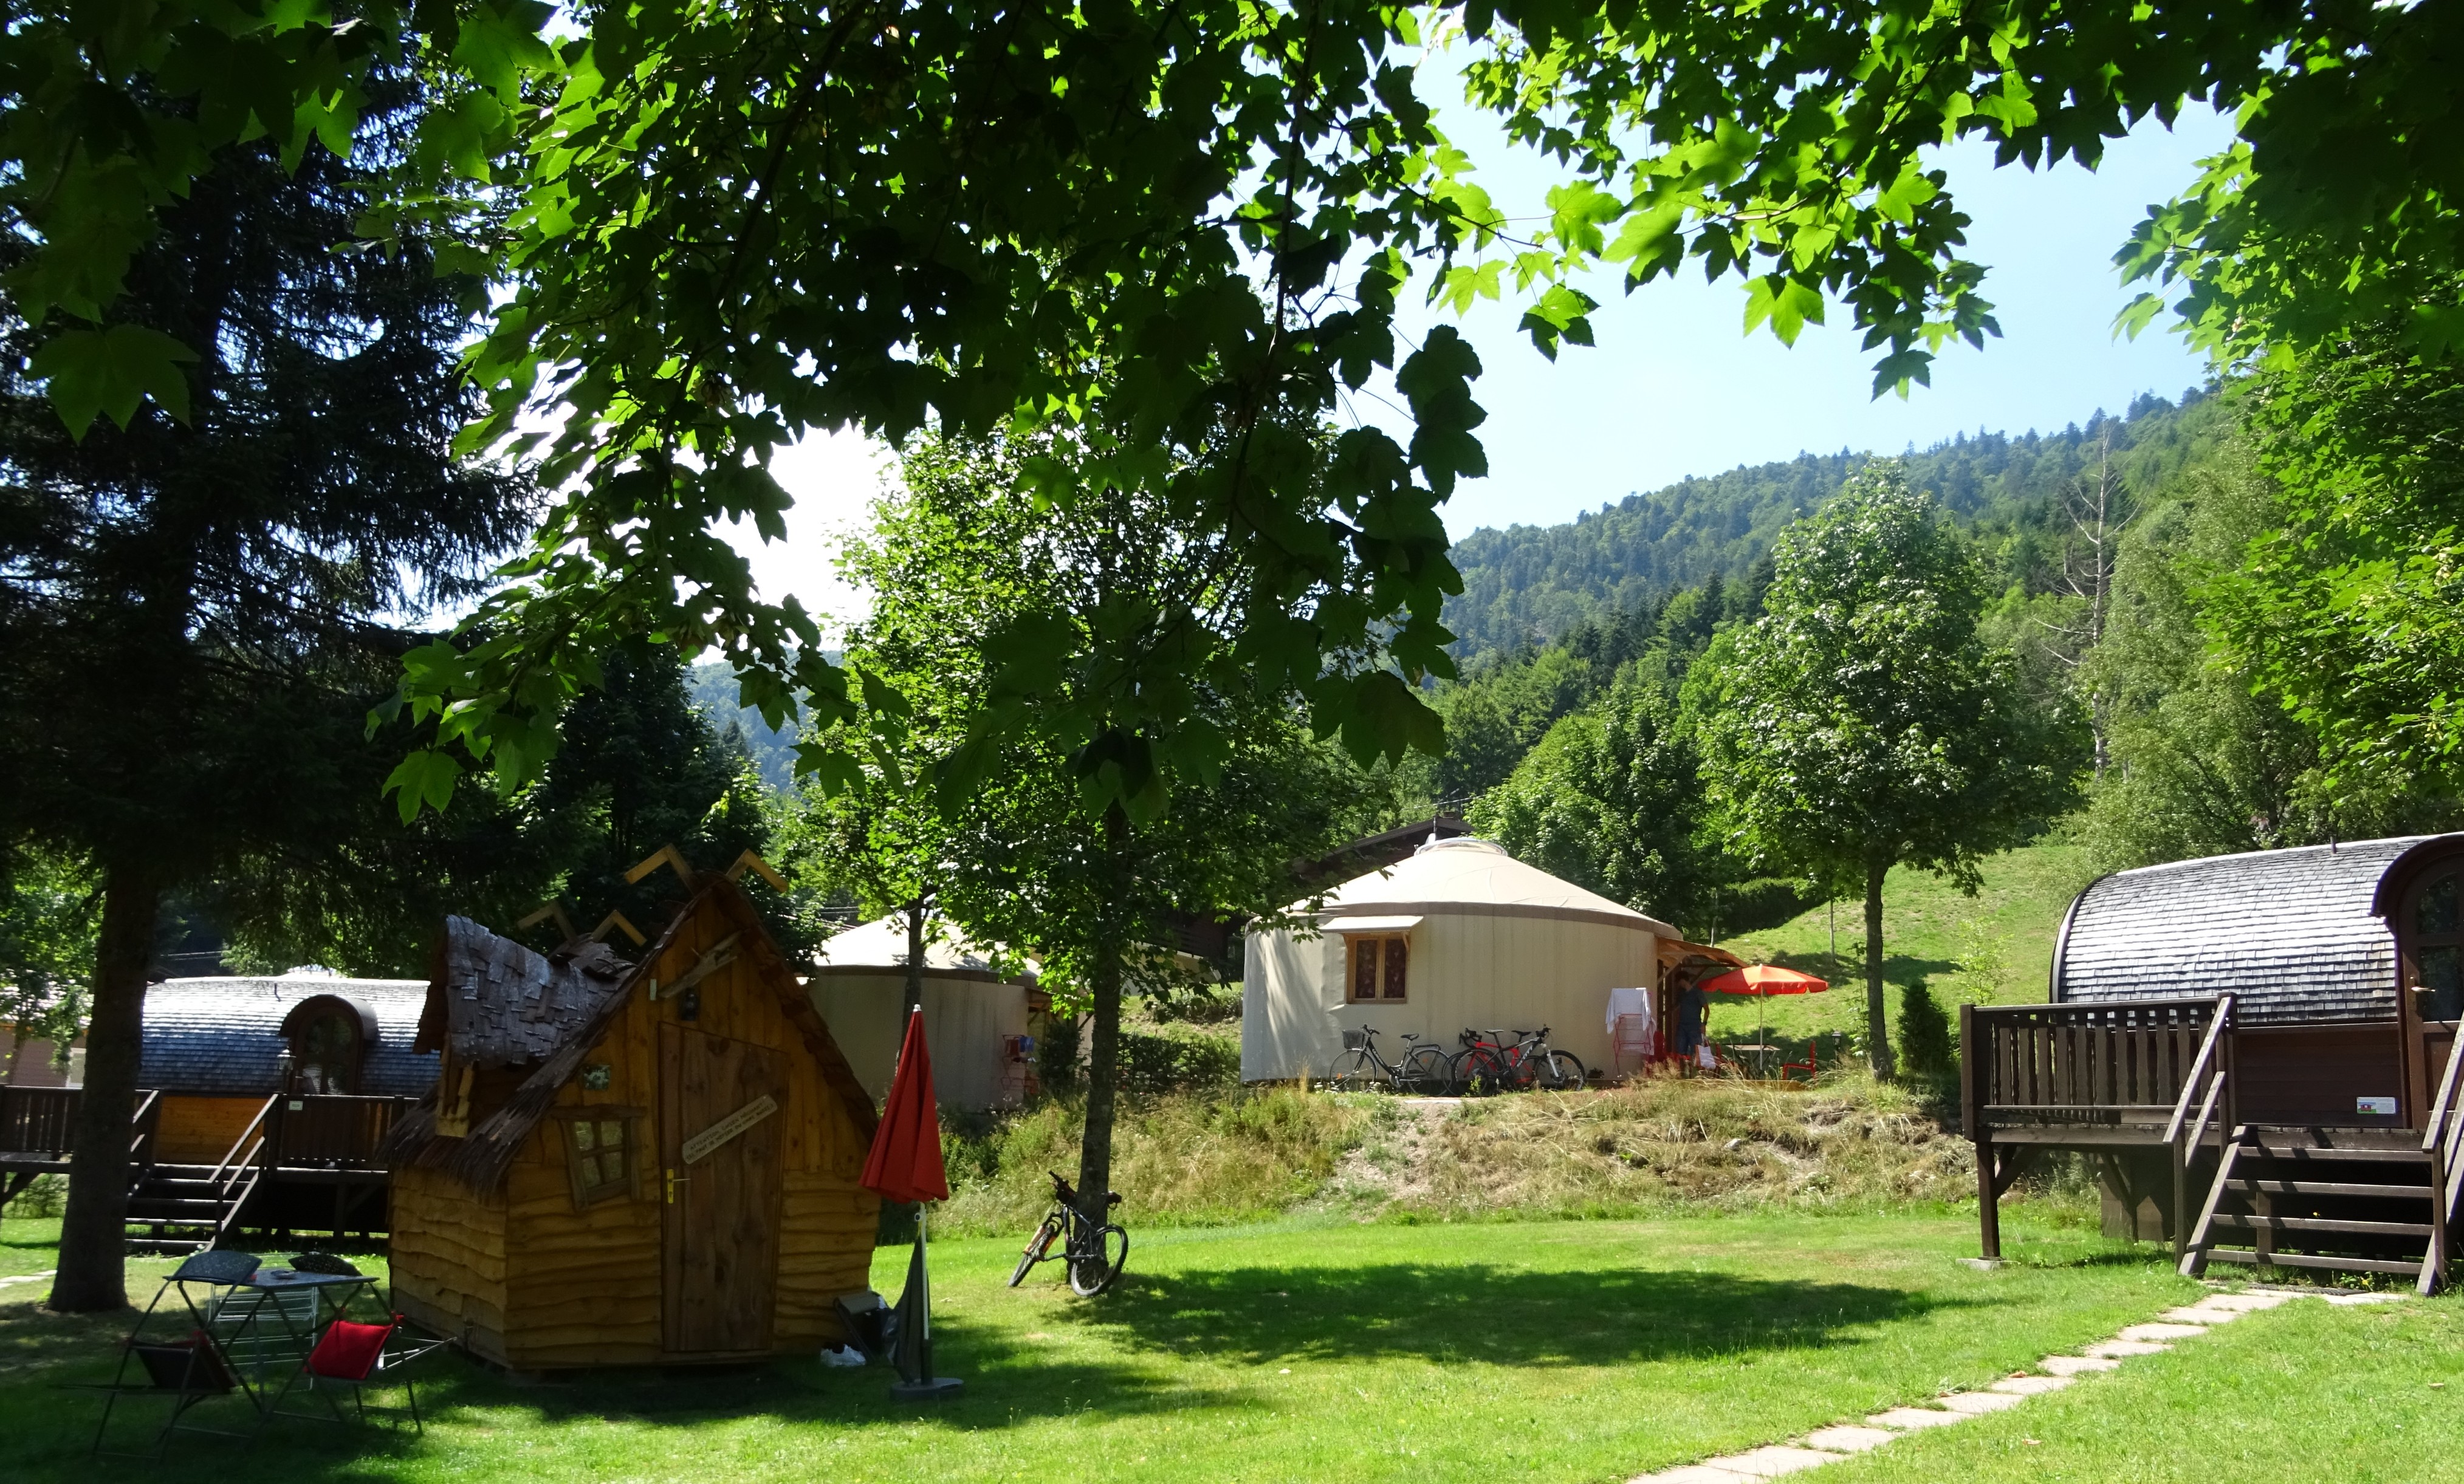  Camping de Belle Hutte La Bresse Lorraine France